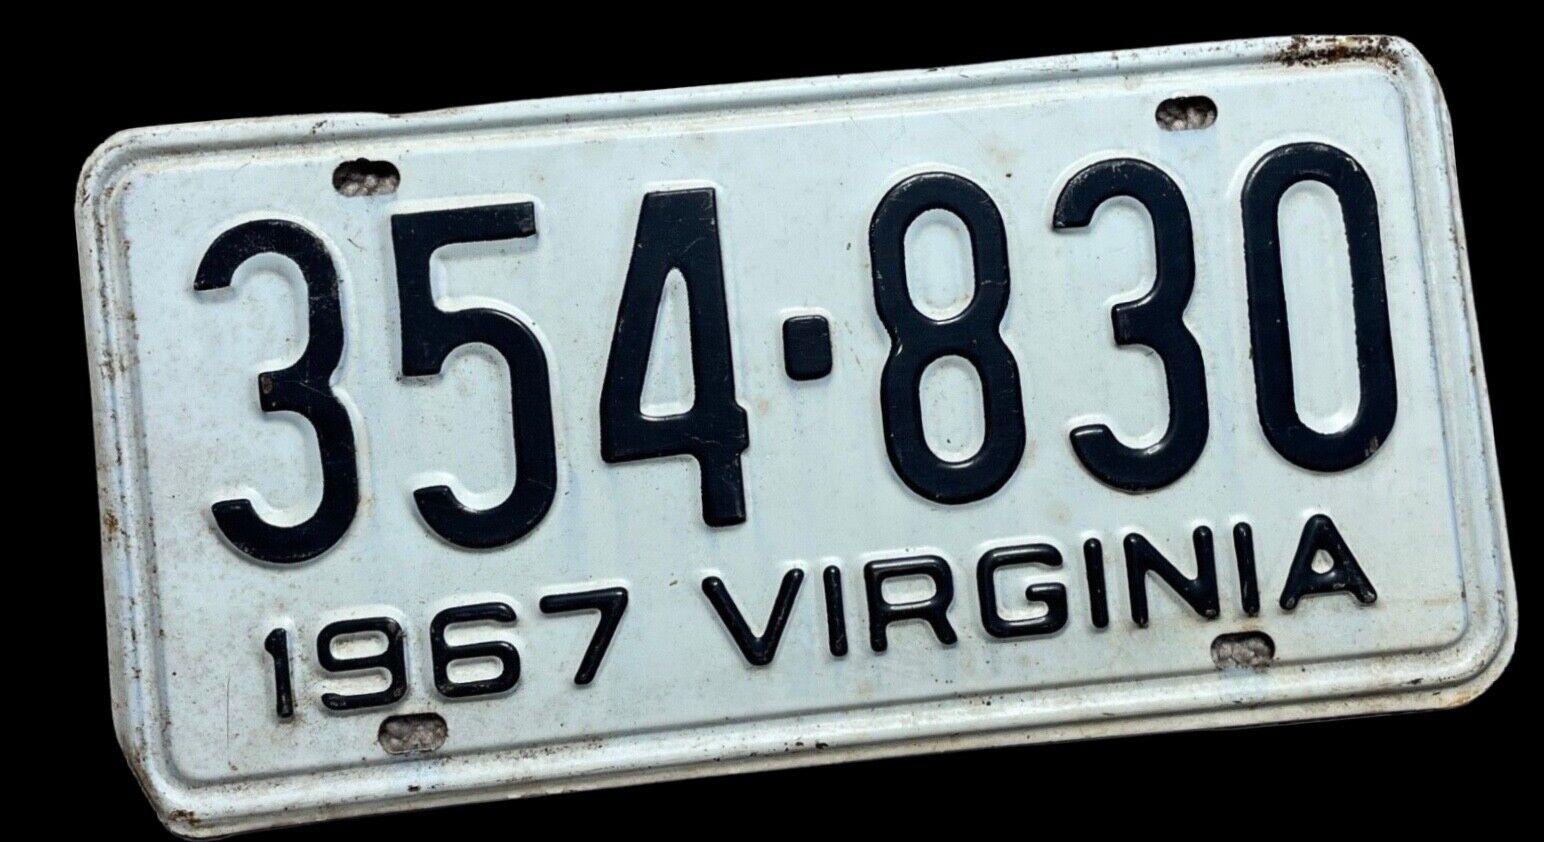 VTG  1967 Virginia 12 x 6 car license plate metal white automobile collectible